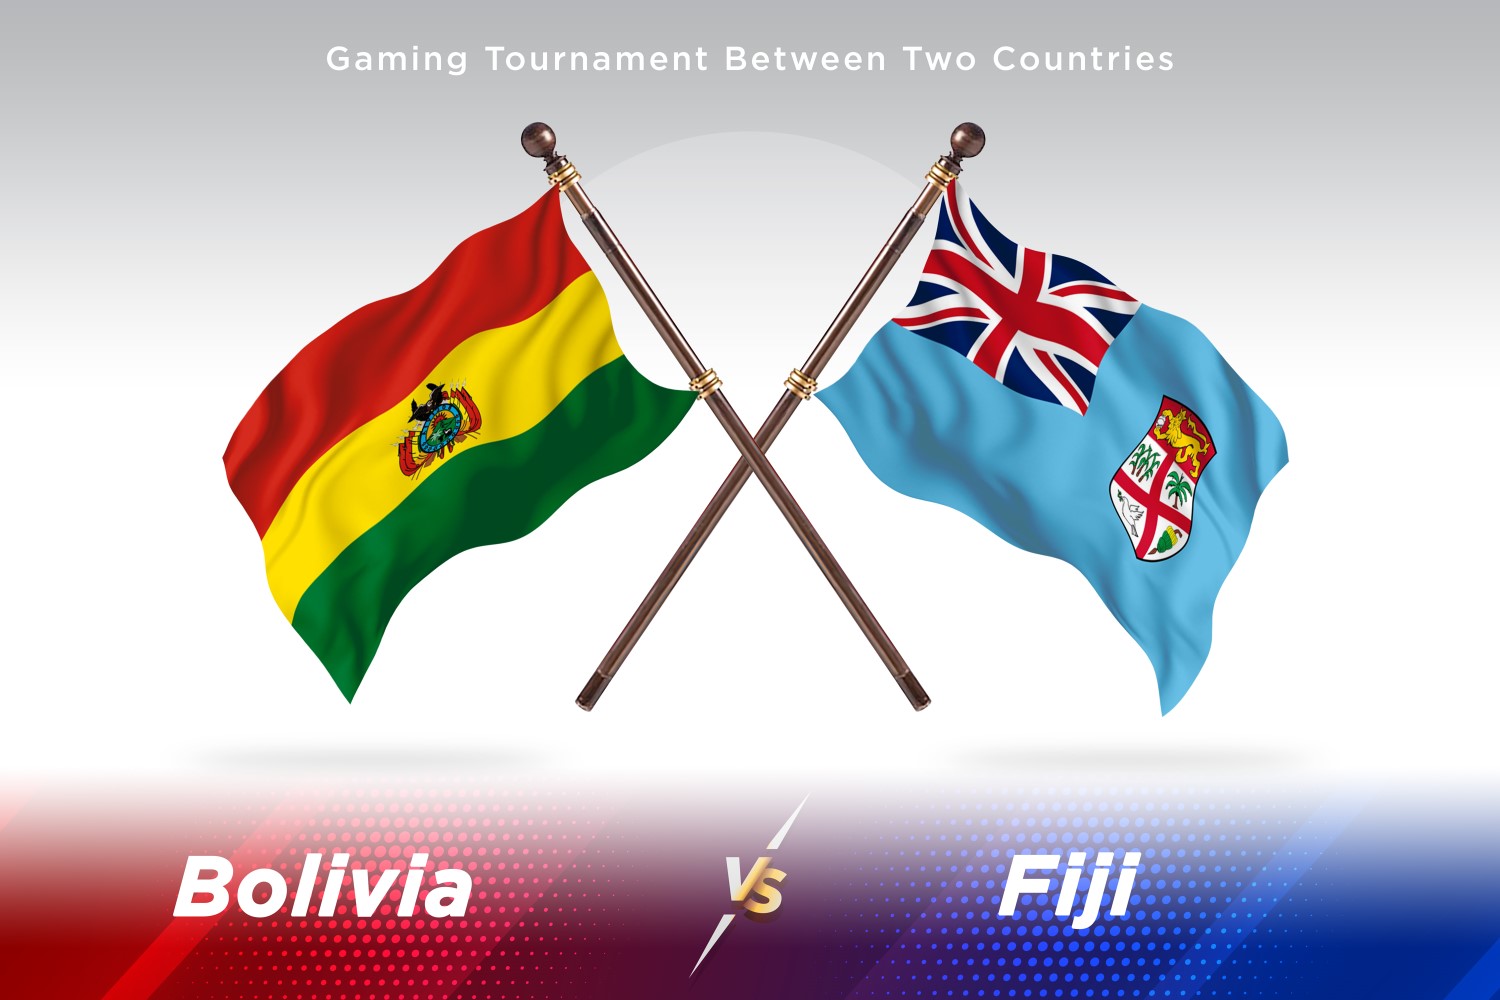 Bolivia versus Fiji Two Flags